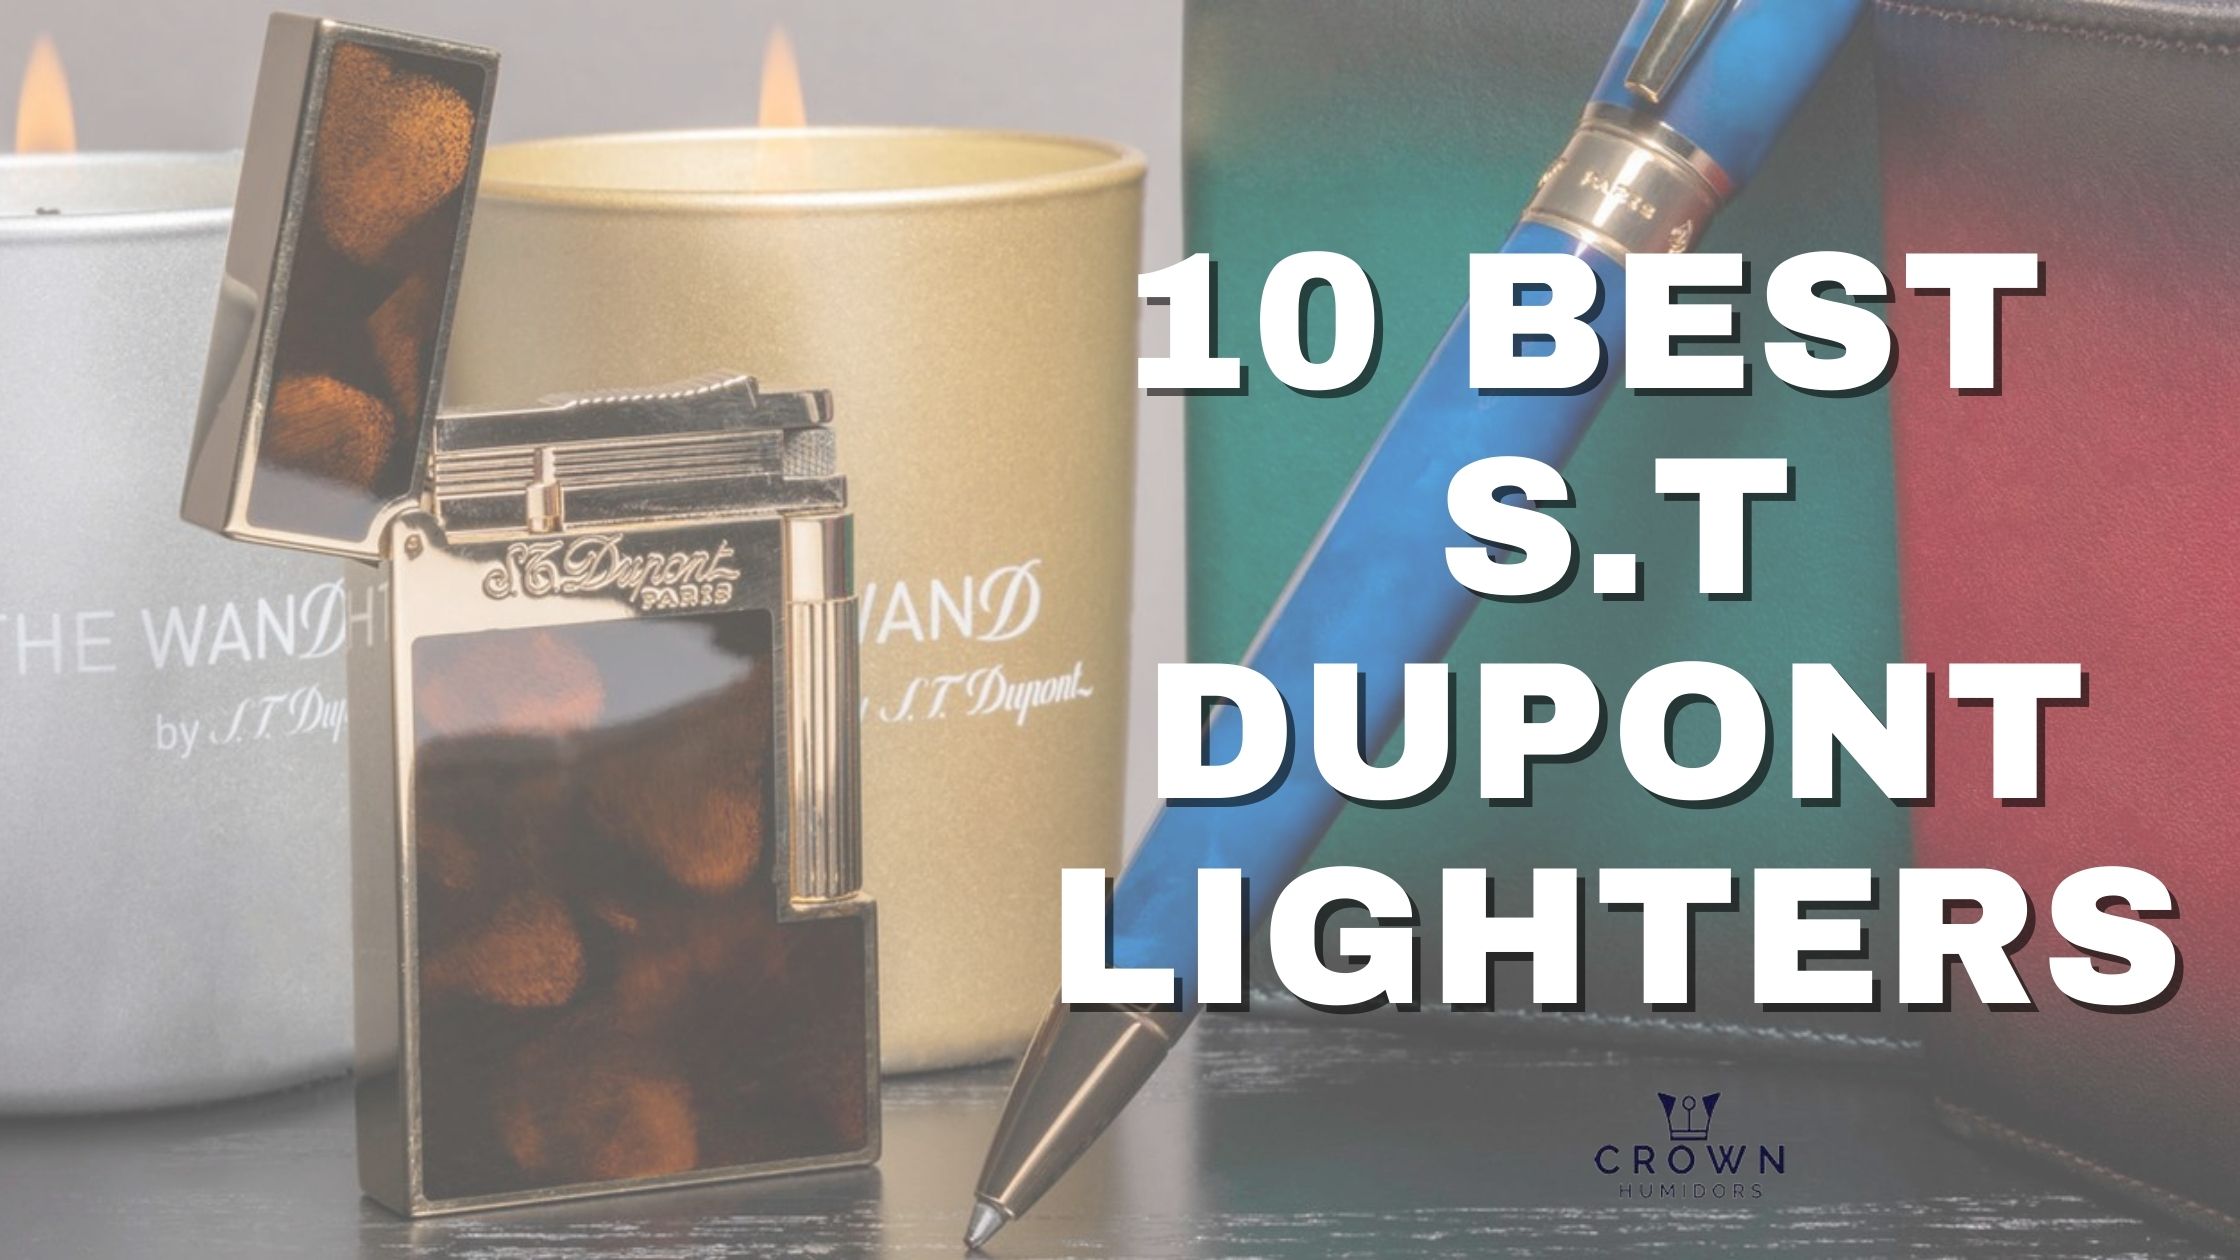 10 BEST s.t Dupont lighters